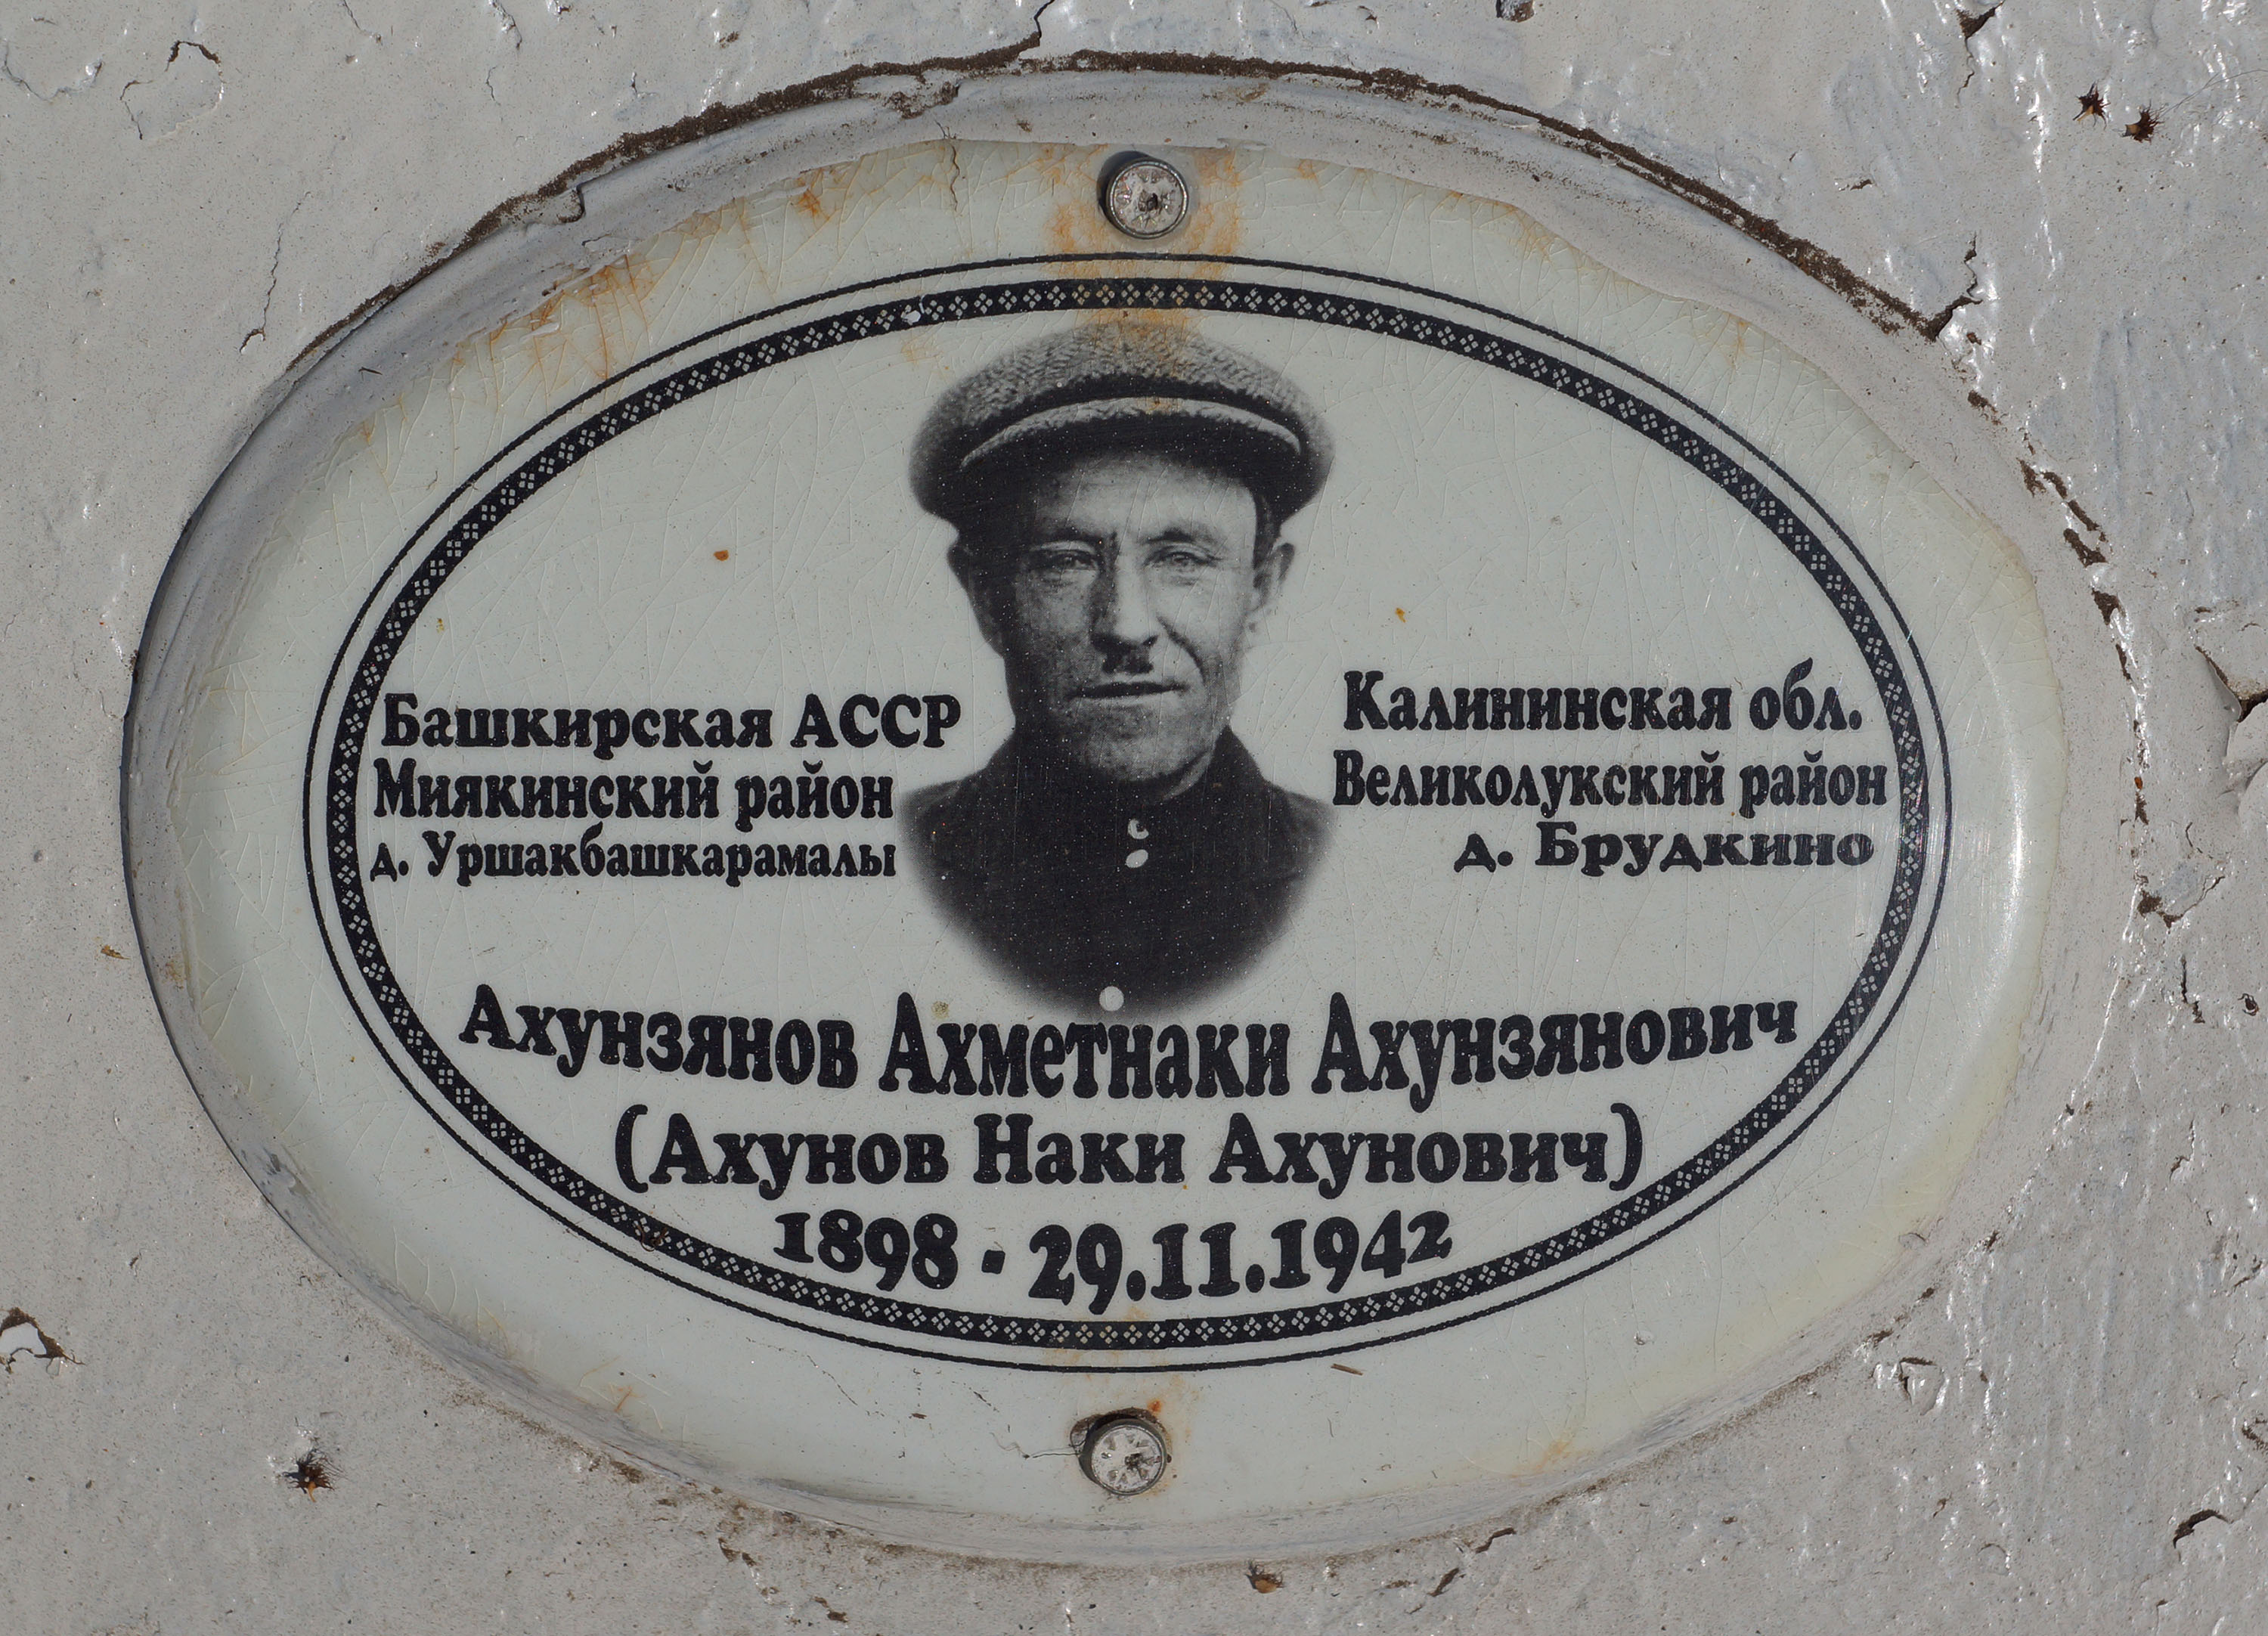 Ахунзянов Ахметнаки Ахунзянович, 1898-1942.